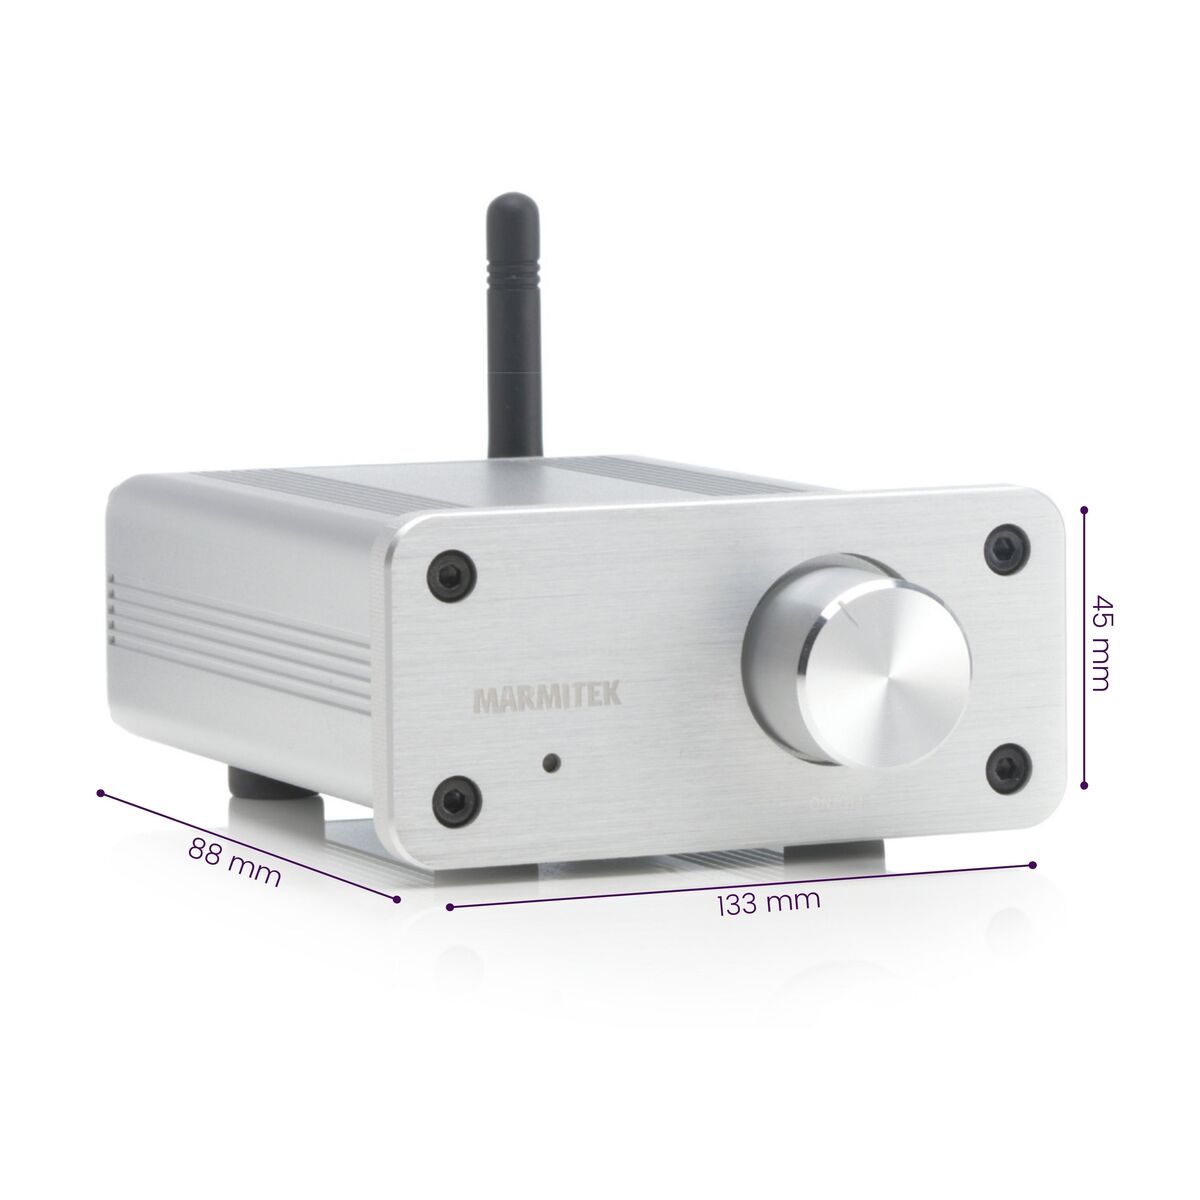 BoomBoom 460 - Bluetooth Receiver with Digital Amplifier - Dimensions Image | Marmitek